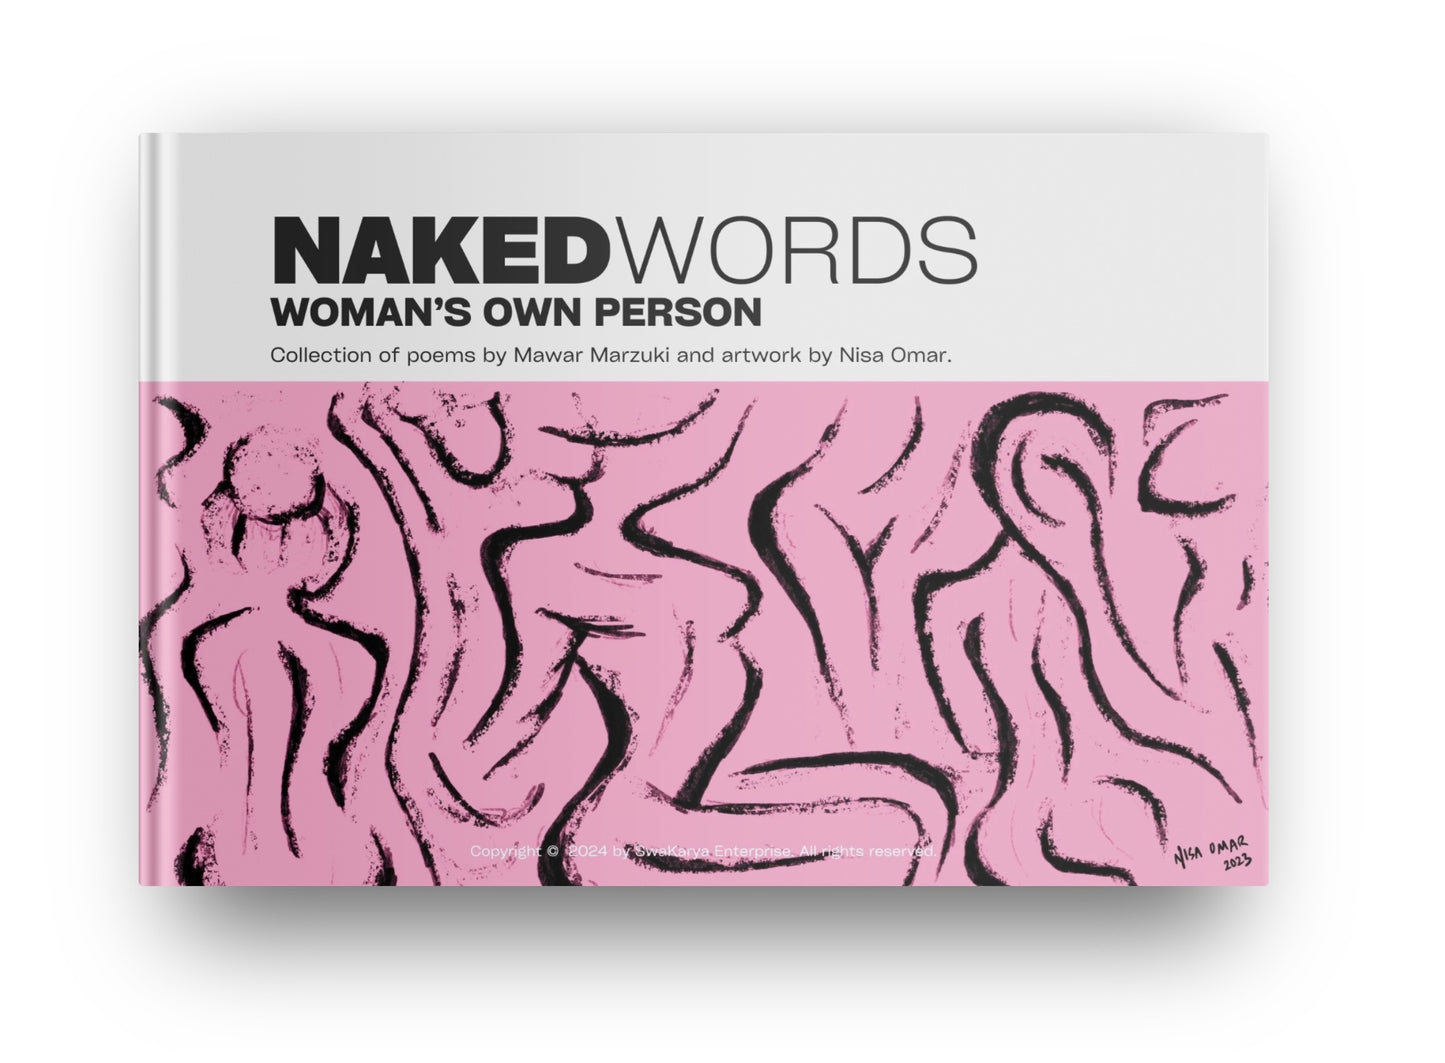 Pre-order "Naked Words"